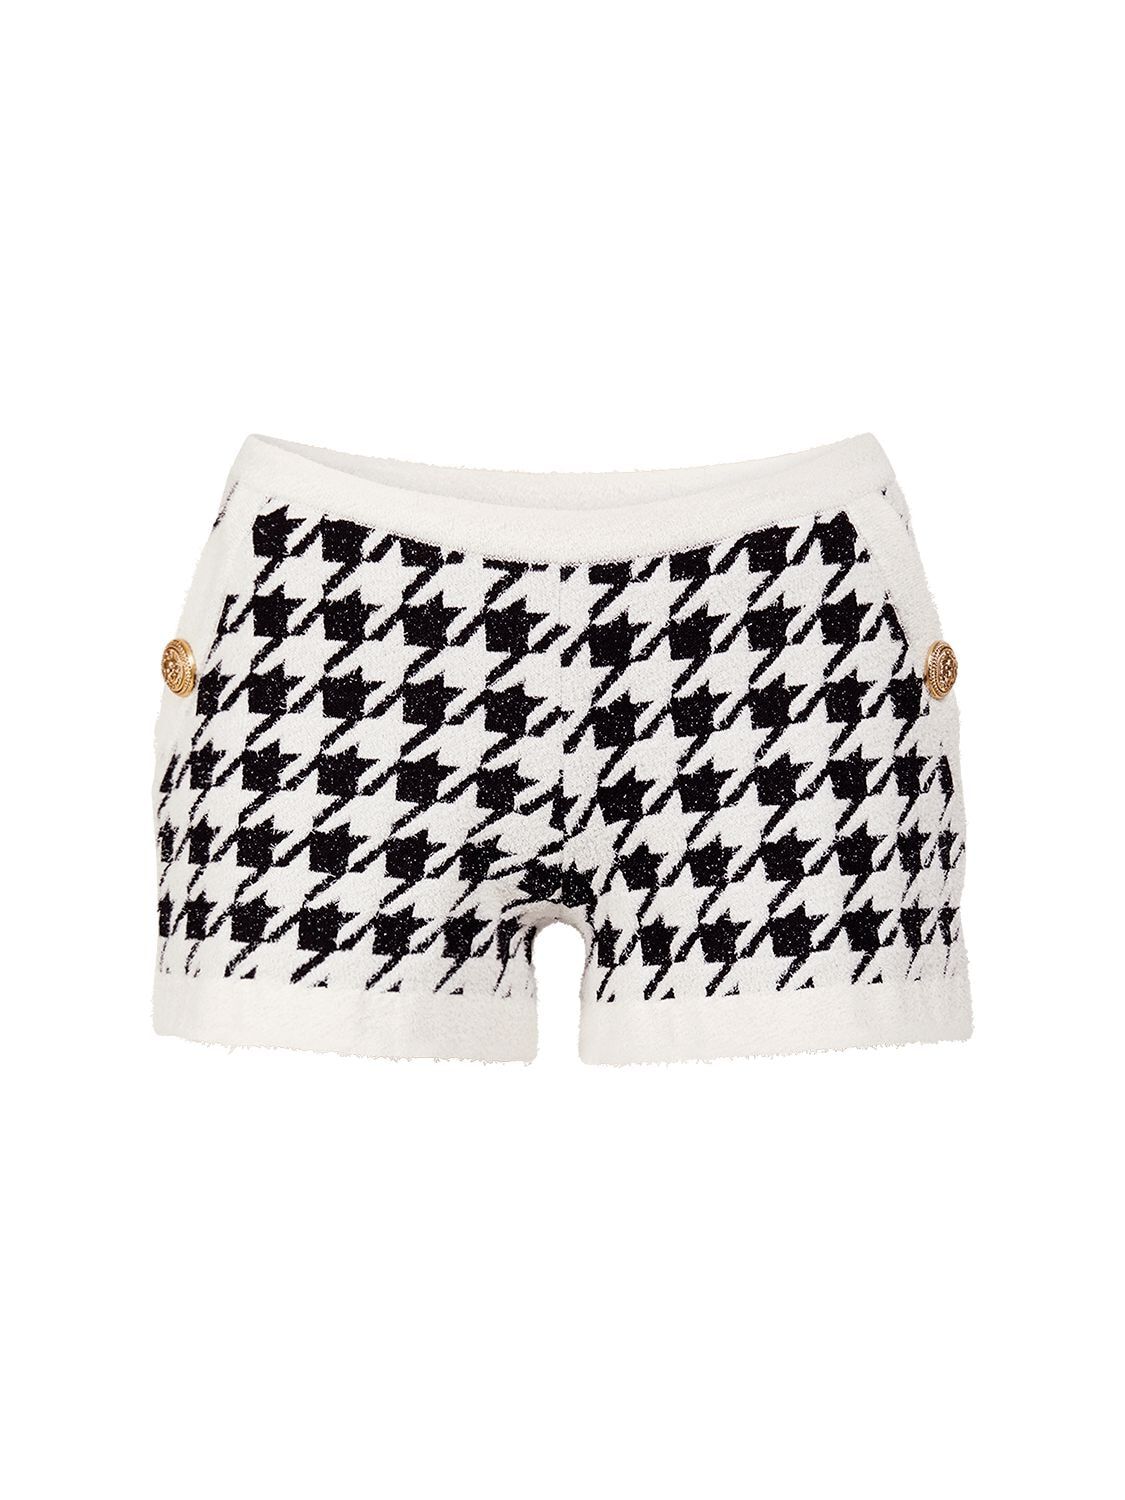 BALMAIN Viscose Blend Houndstooth Mini Shorts in black / white